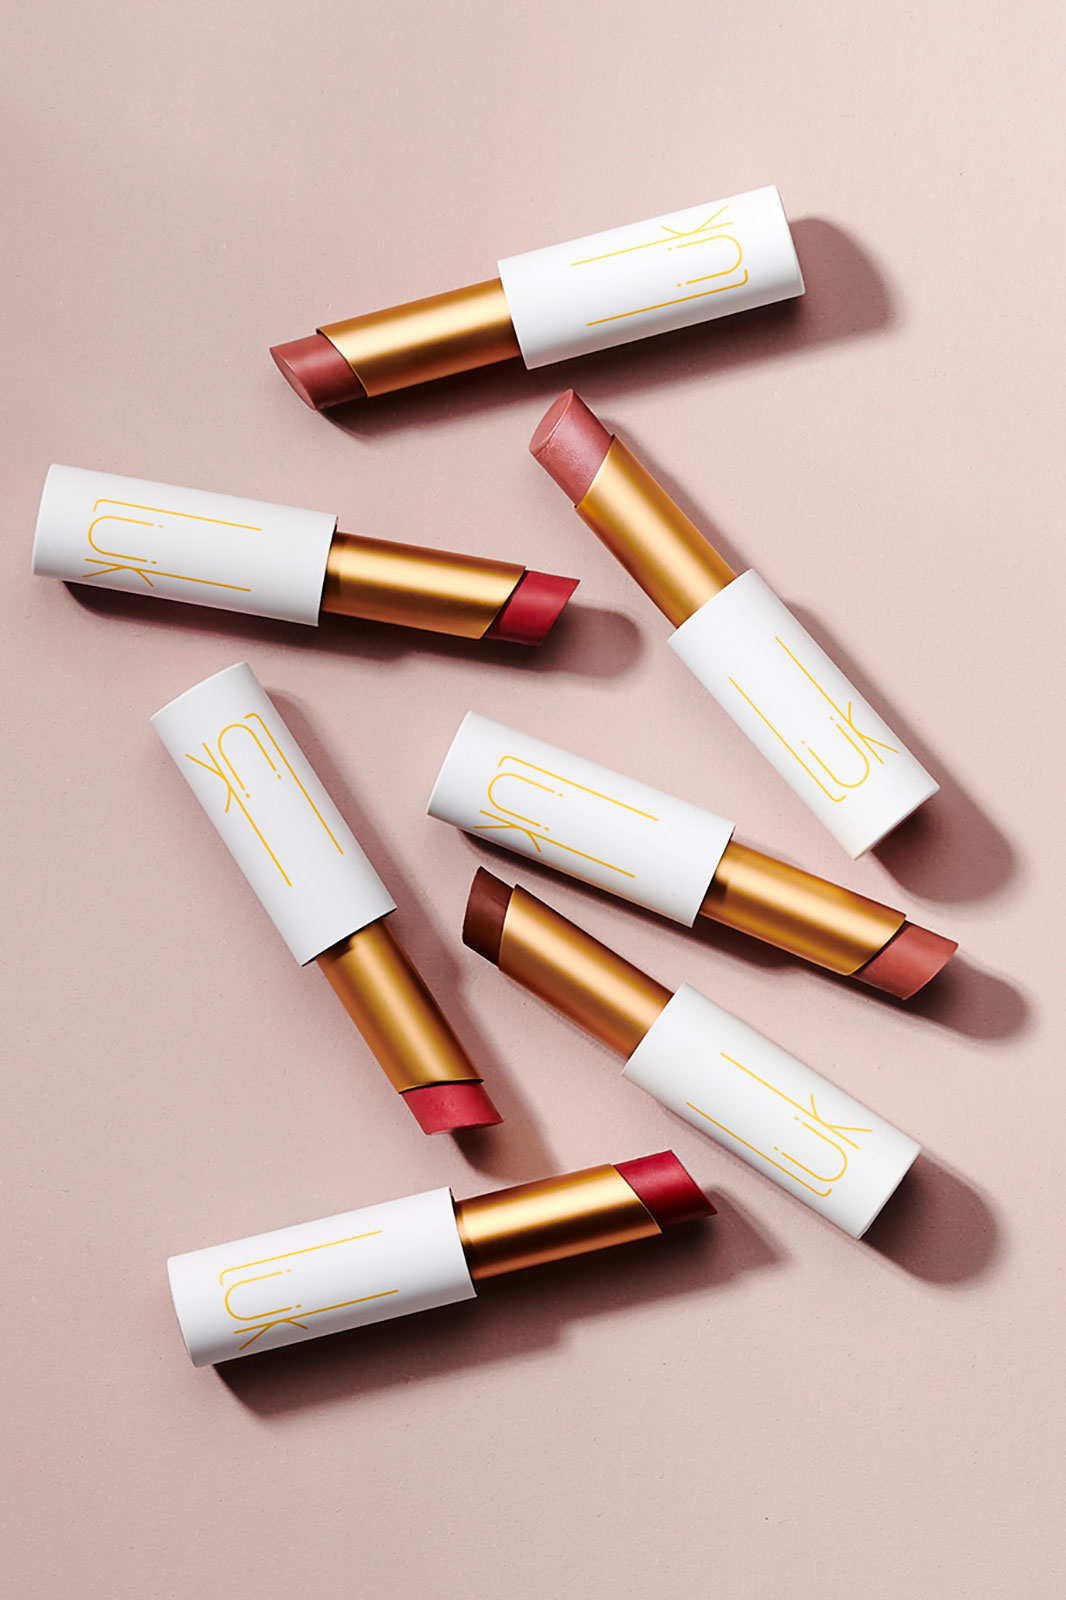 Seven tubes of lipstick on mauve surface